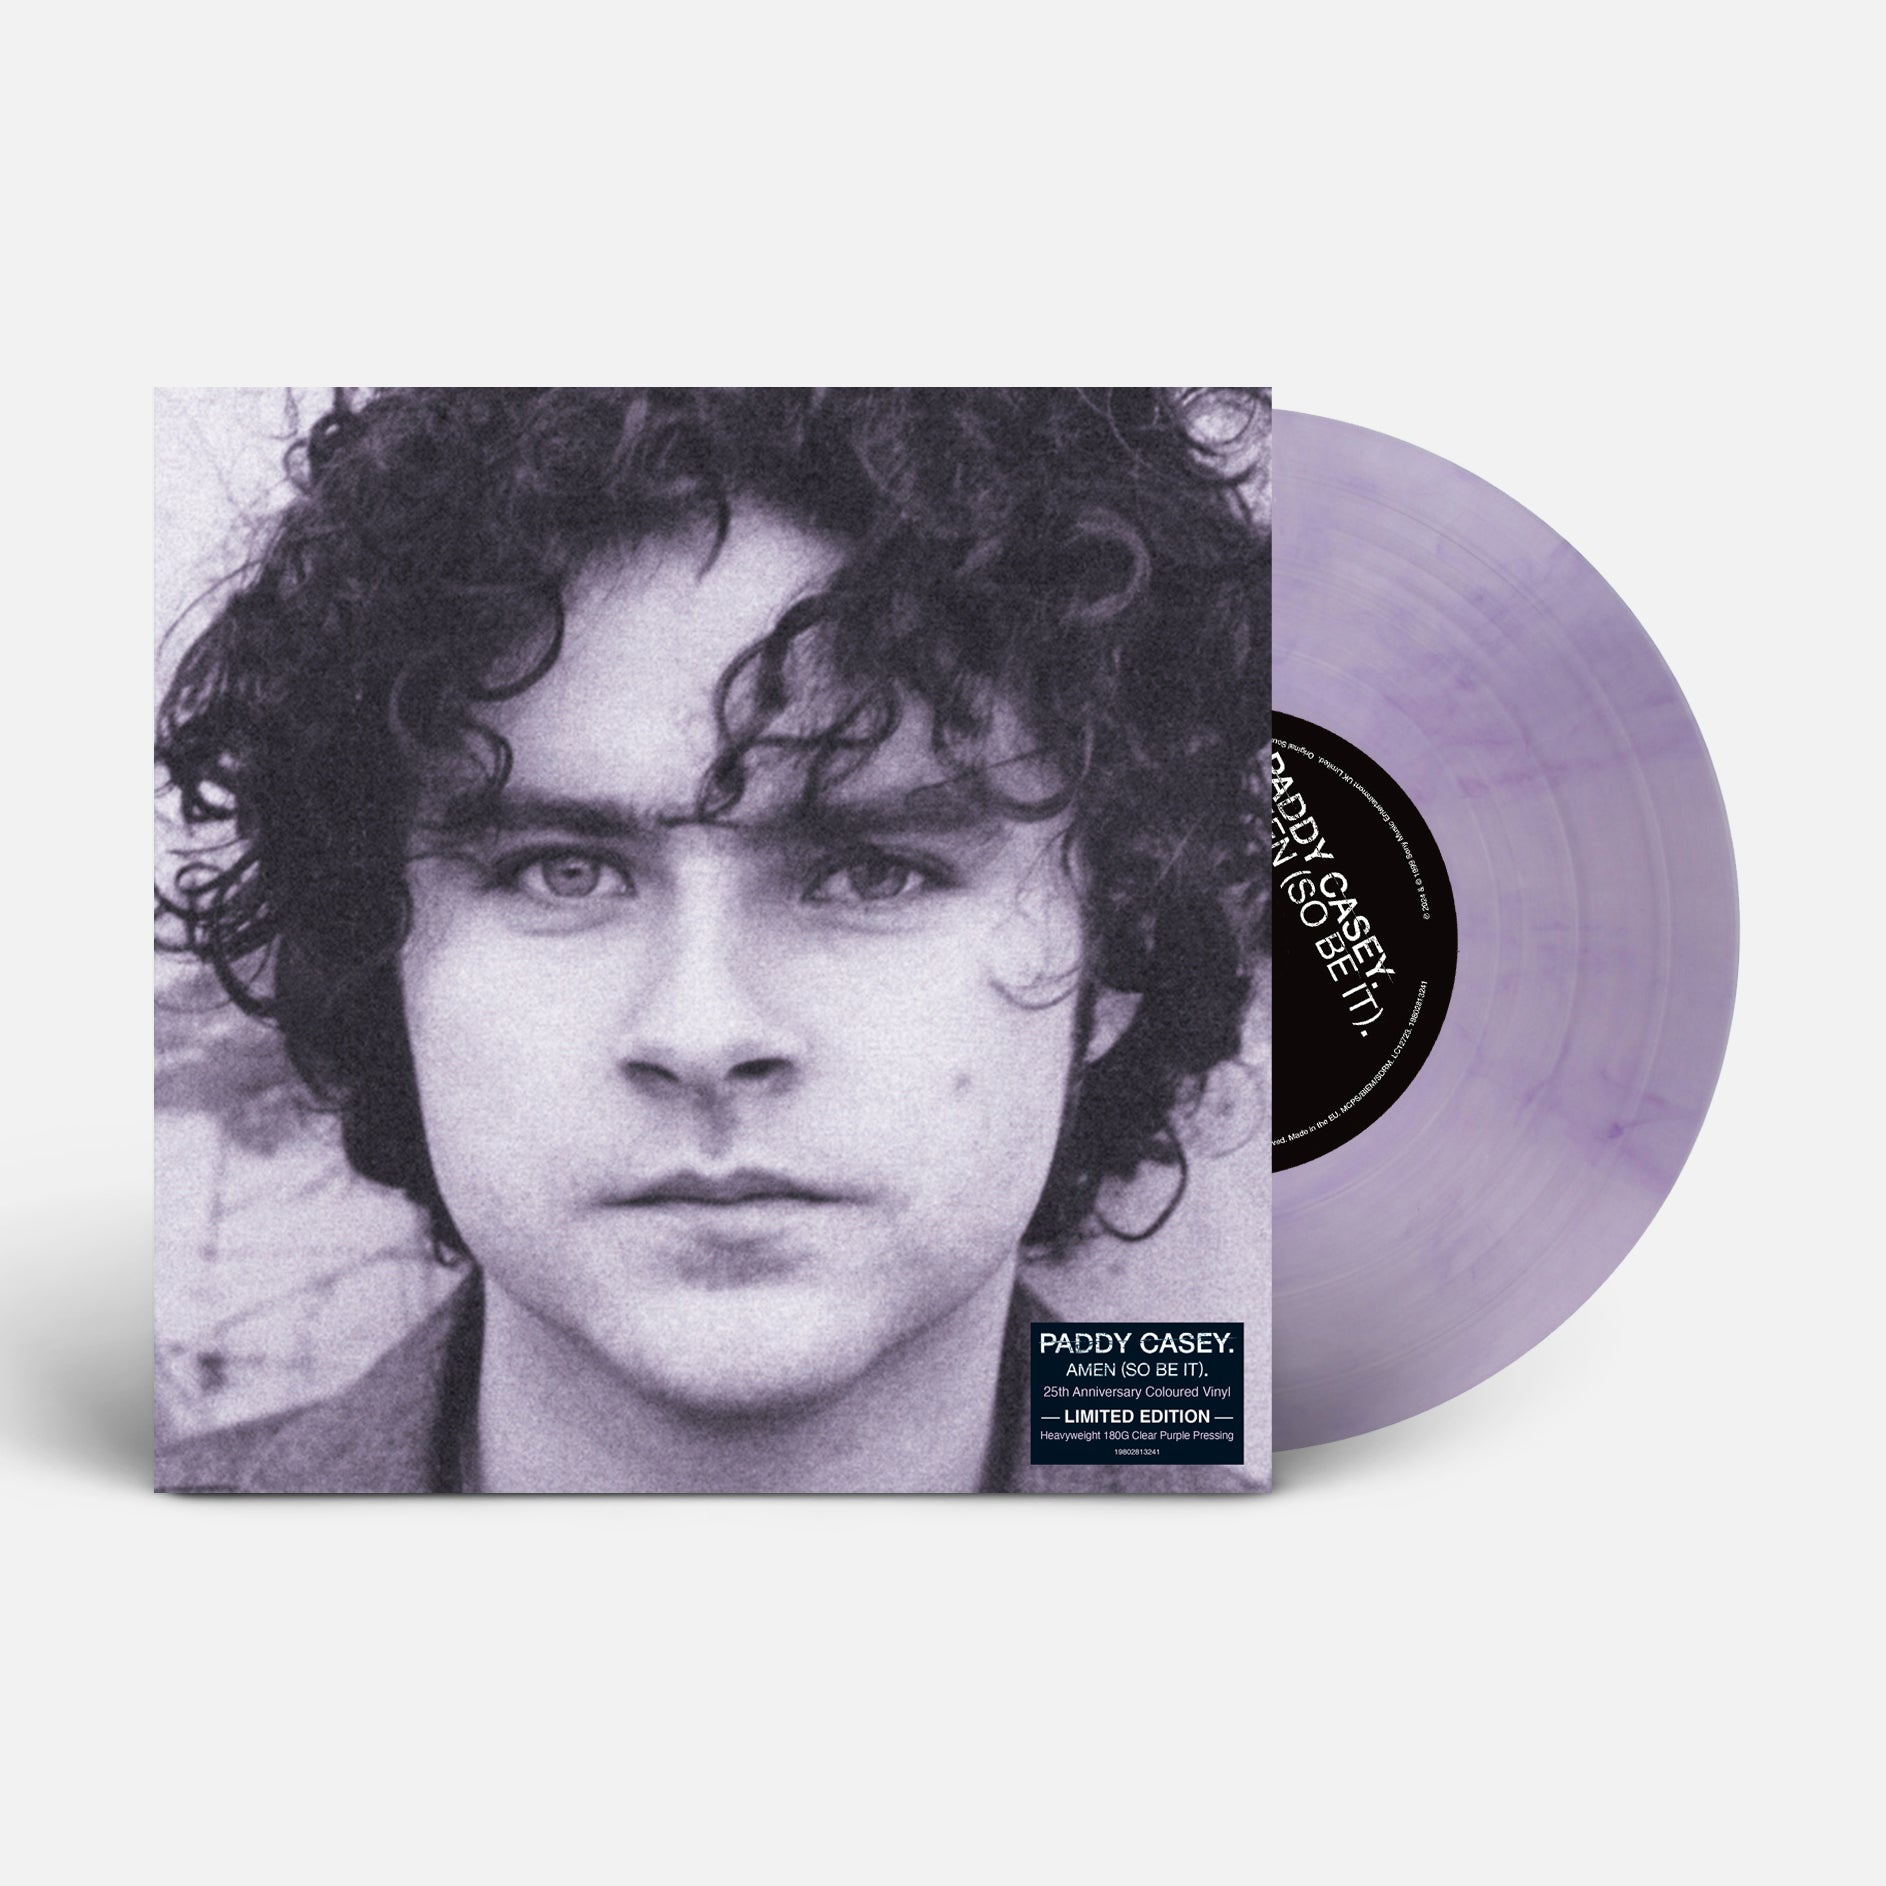 Paddy Casey - Amen (So Be It): Limited Clear Purple Vinyl LP